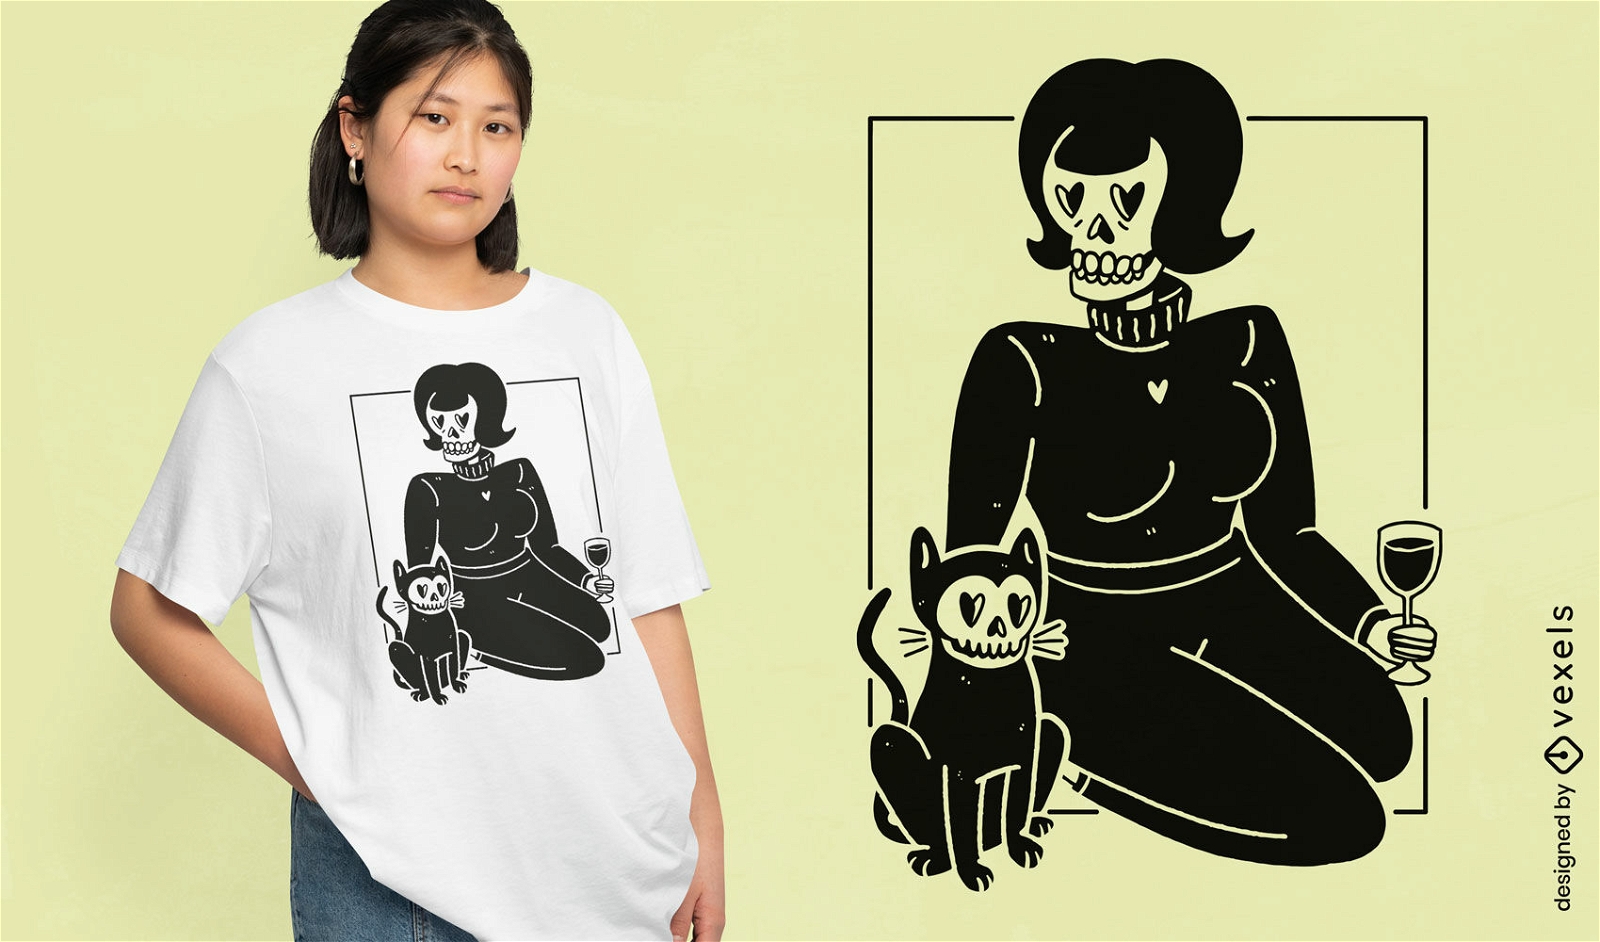 Skeleton girl and cat t-shirt design